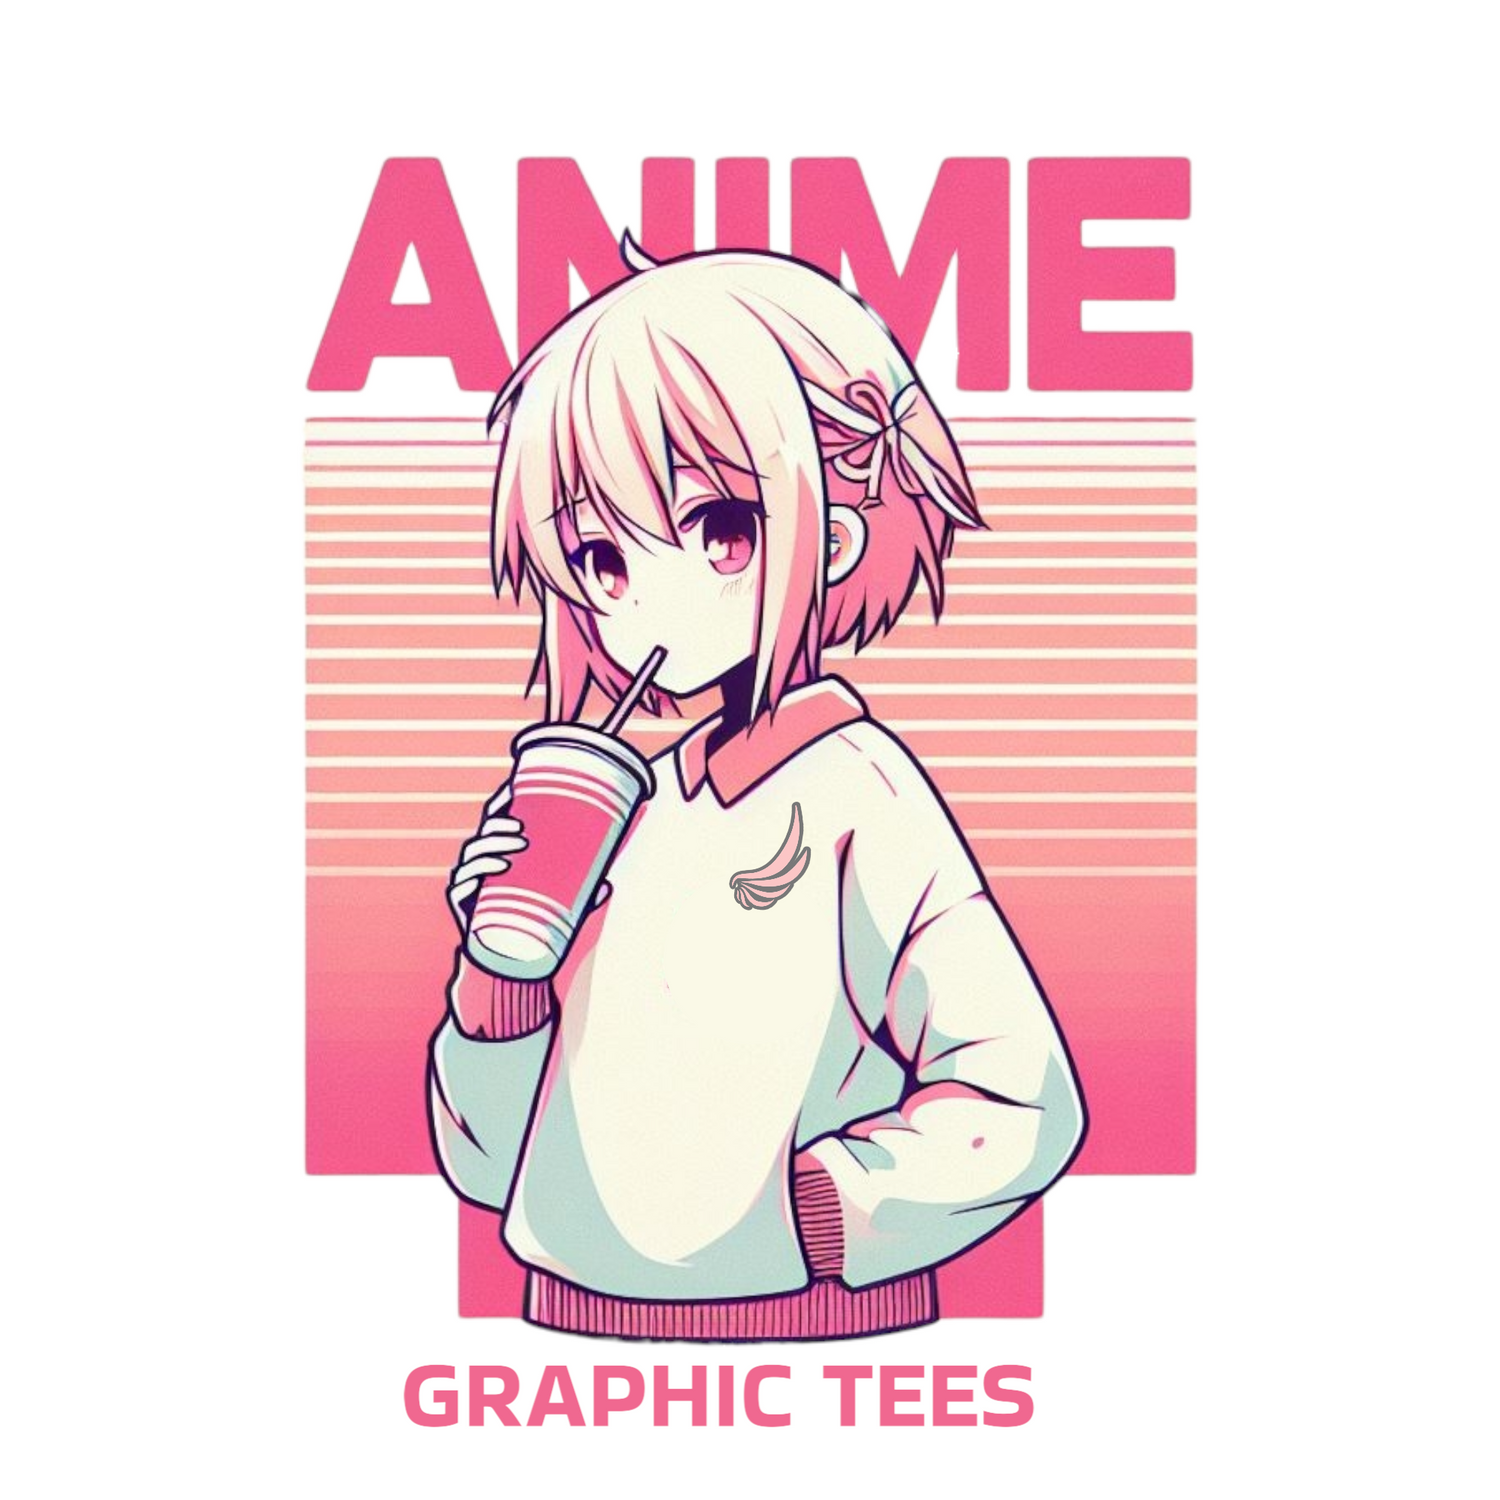 Anime Graphic Tees